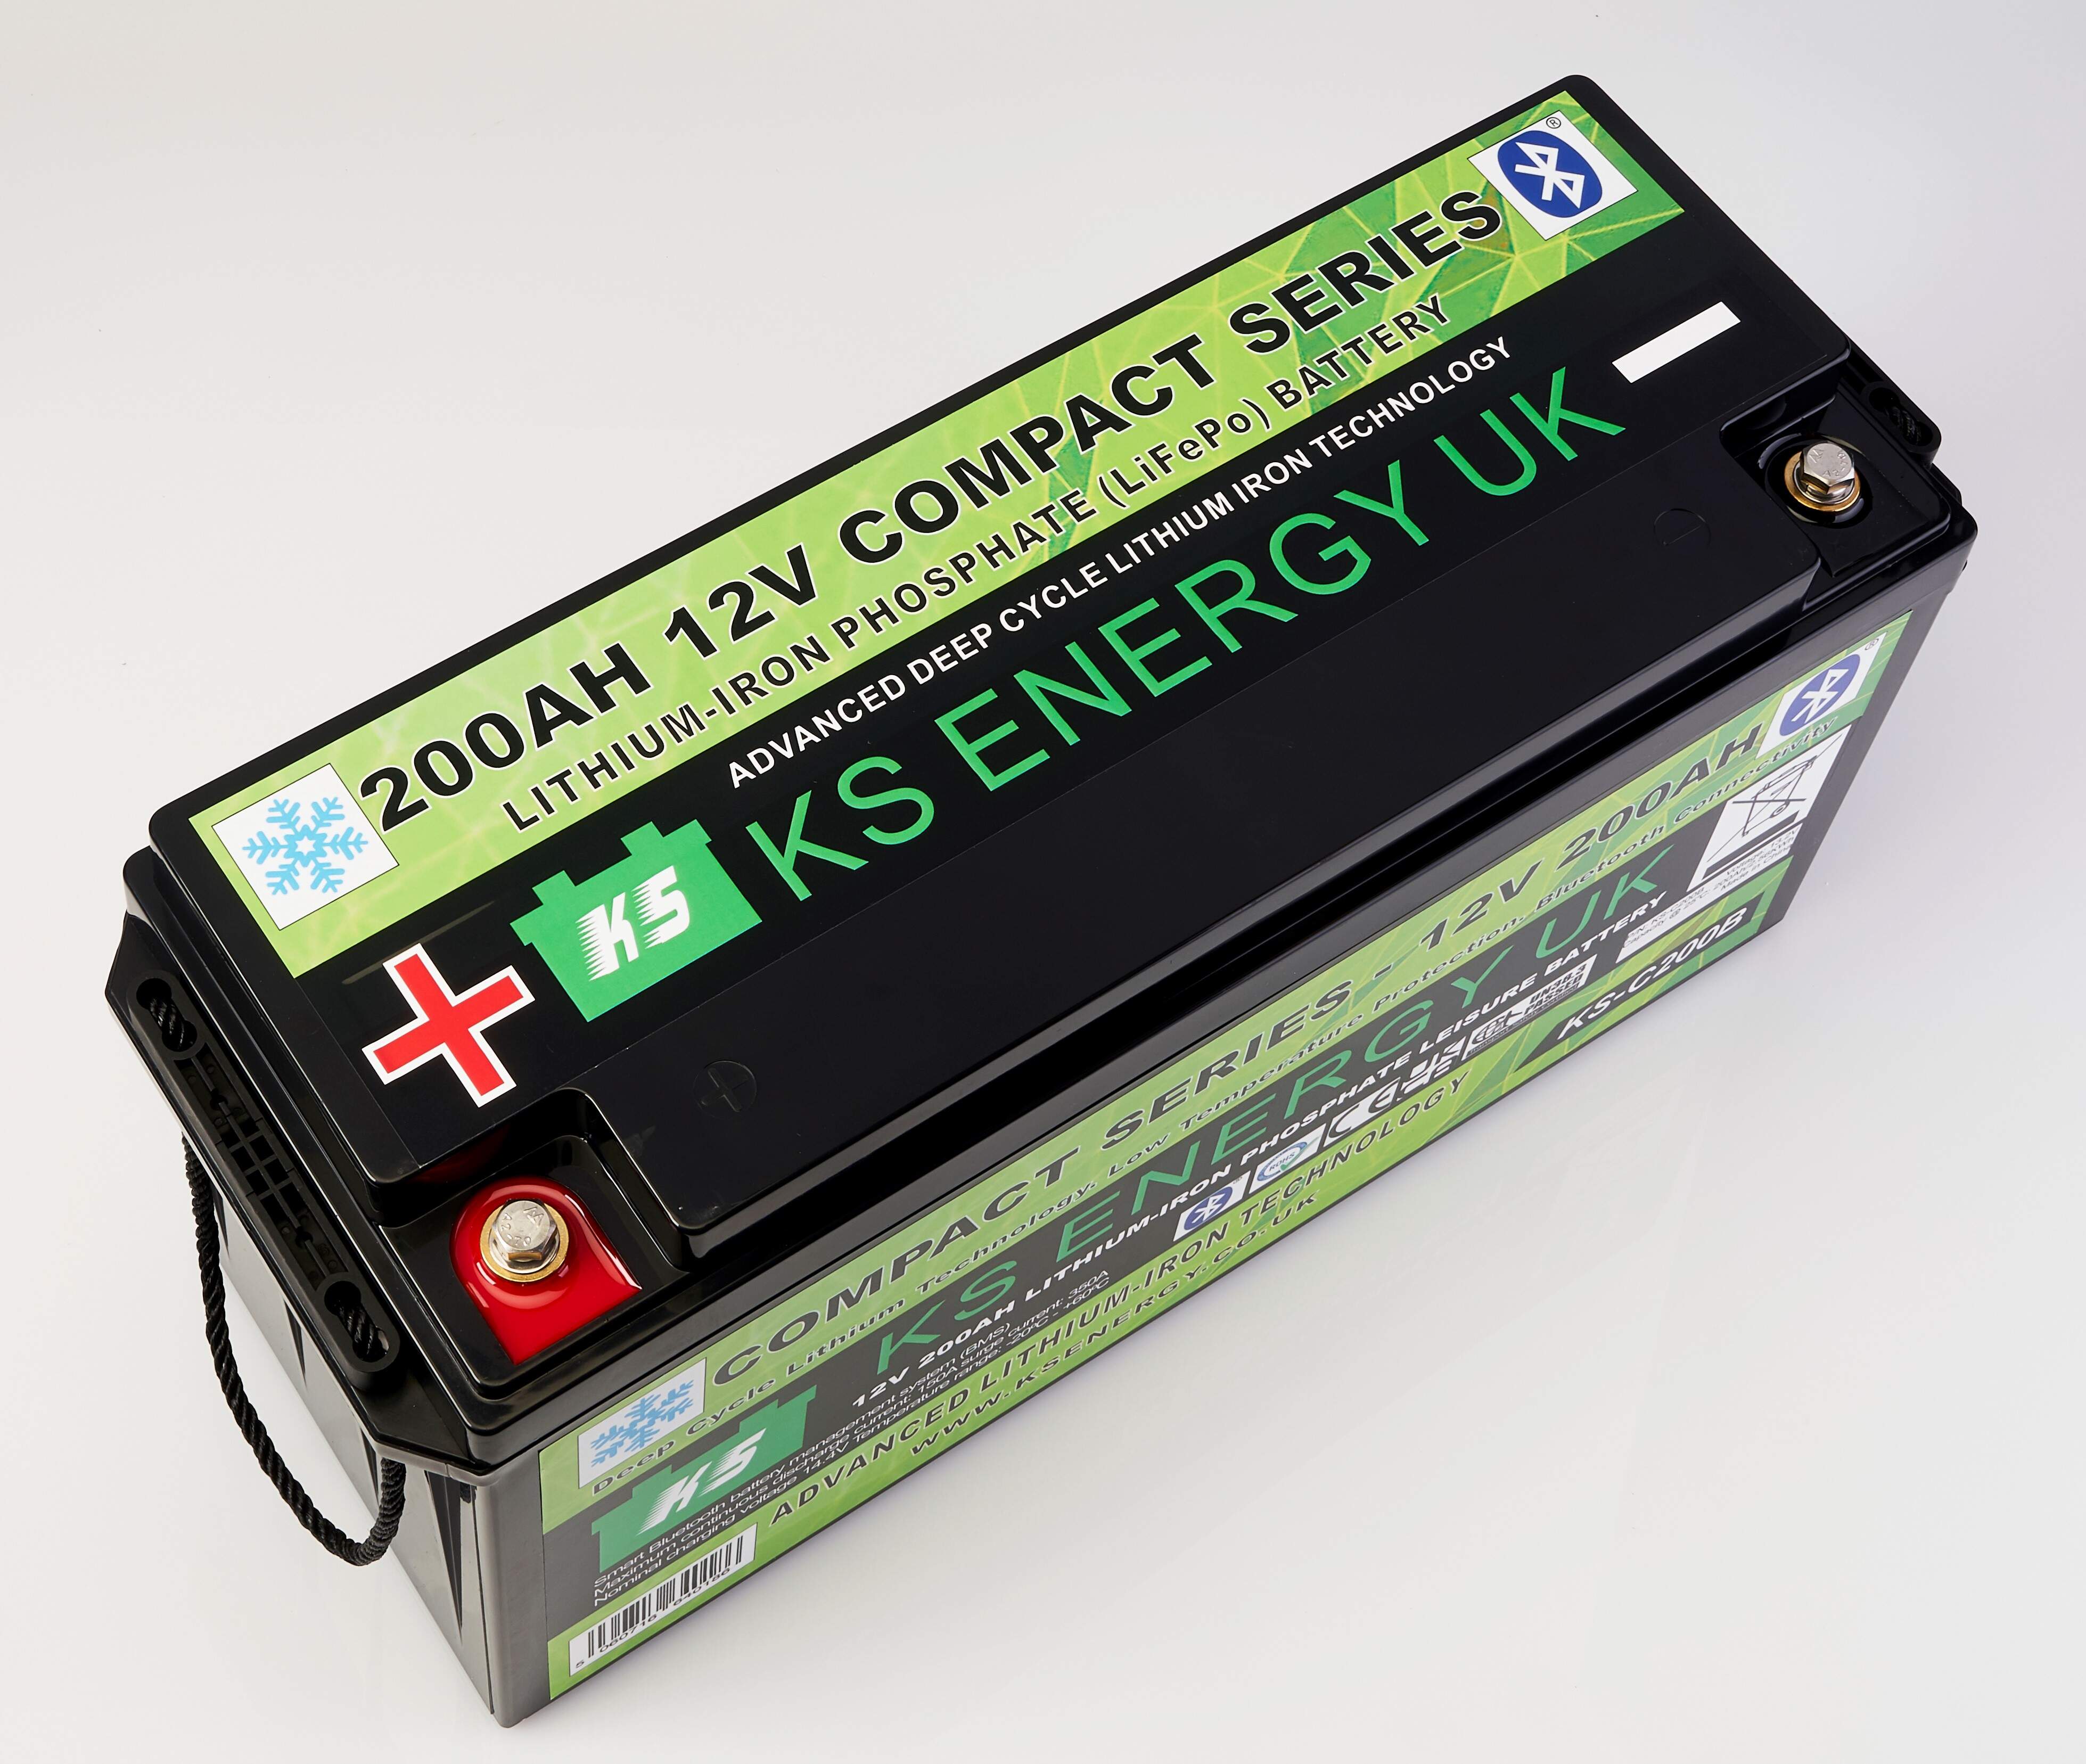 5a): KS-C200B 12v 200AH Compact Series Bluetooth High Power lithium battery